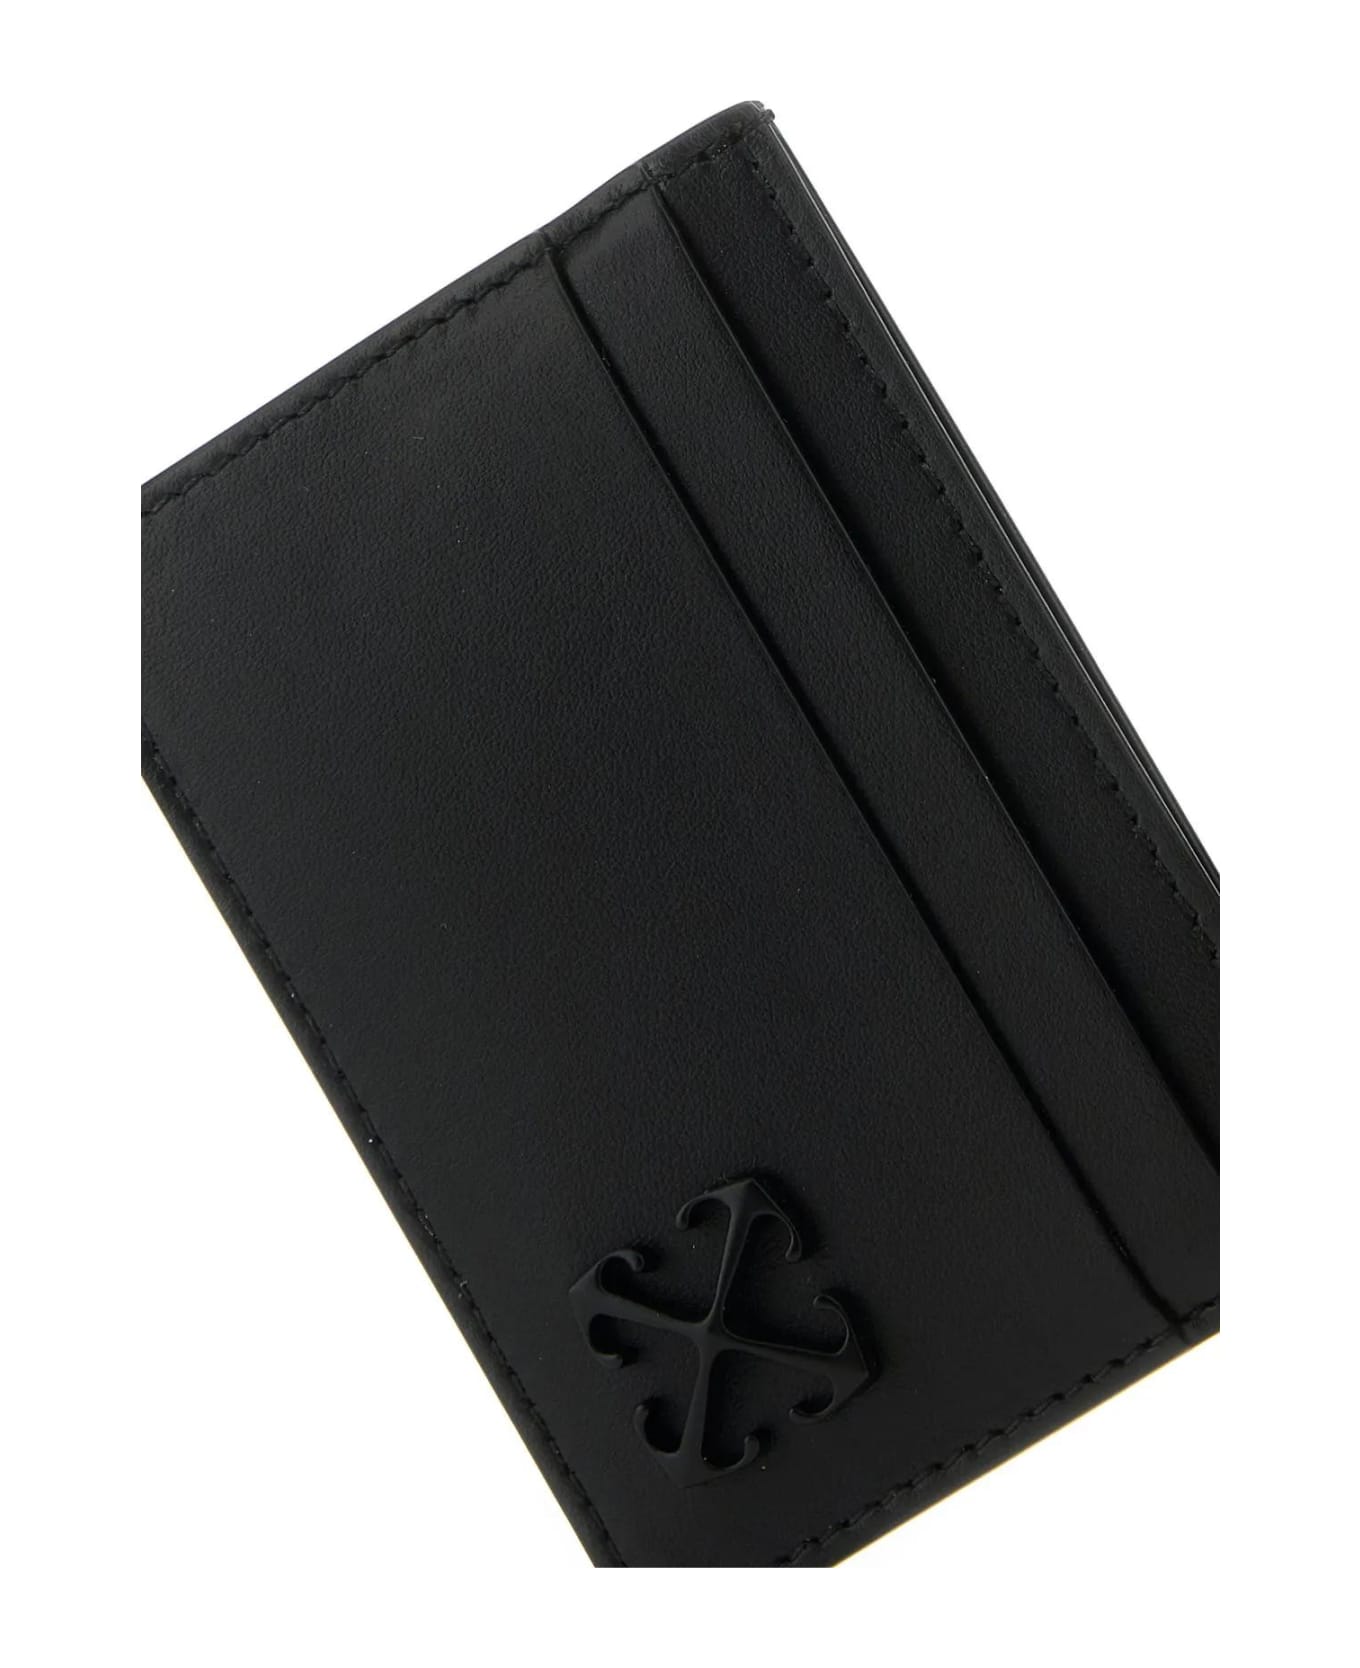 Off-White Black Leather Card Holder - Black 財布